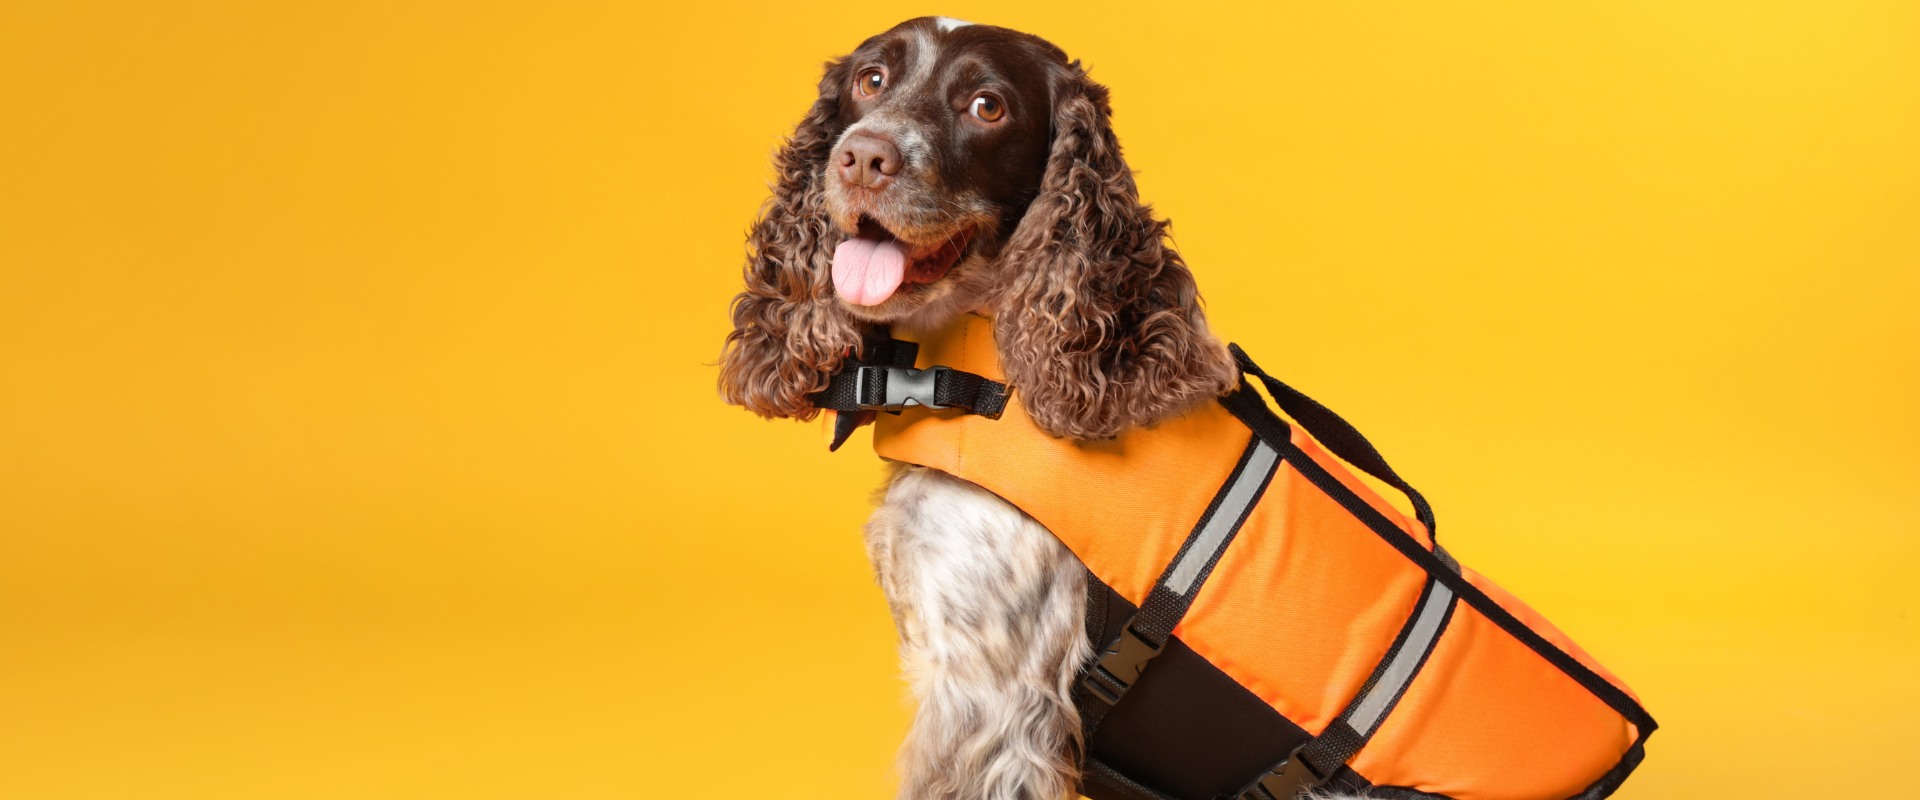 Dog Training Vests